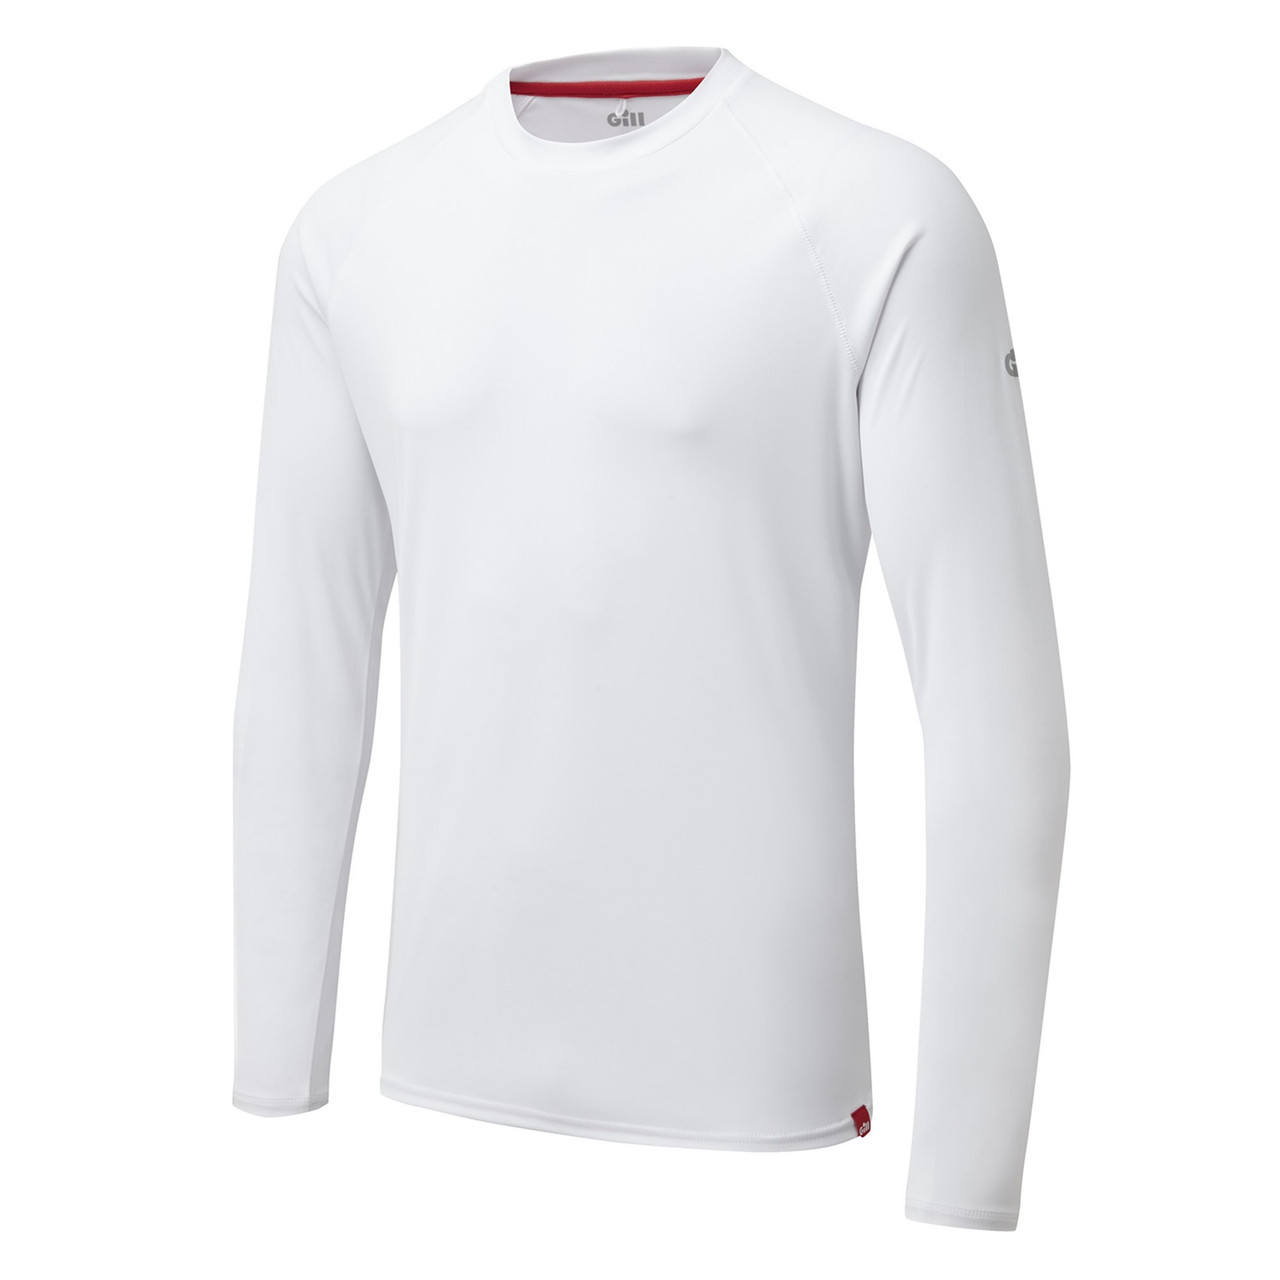 Gillz Contender Series UV Long-Sleeve Shirt for Men - Jet Set - XL